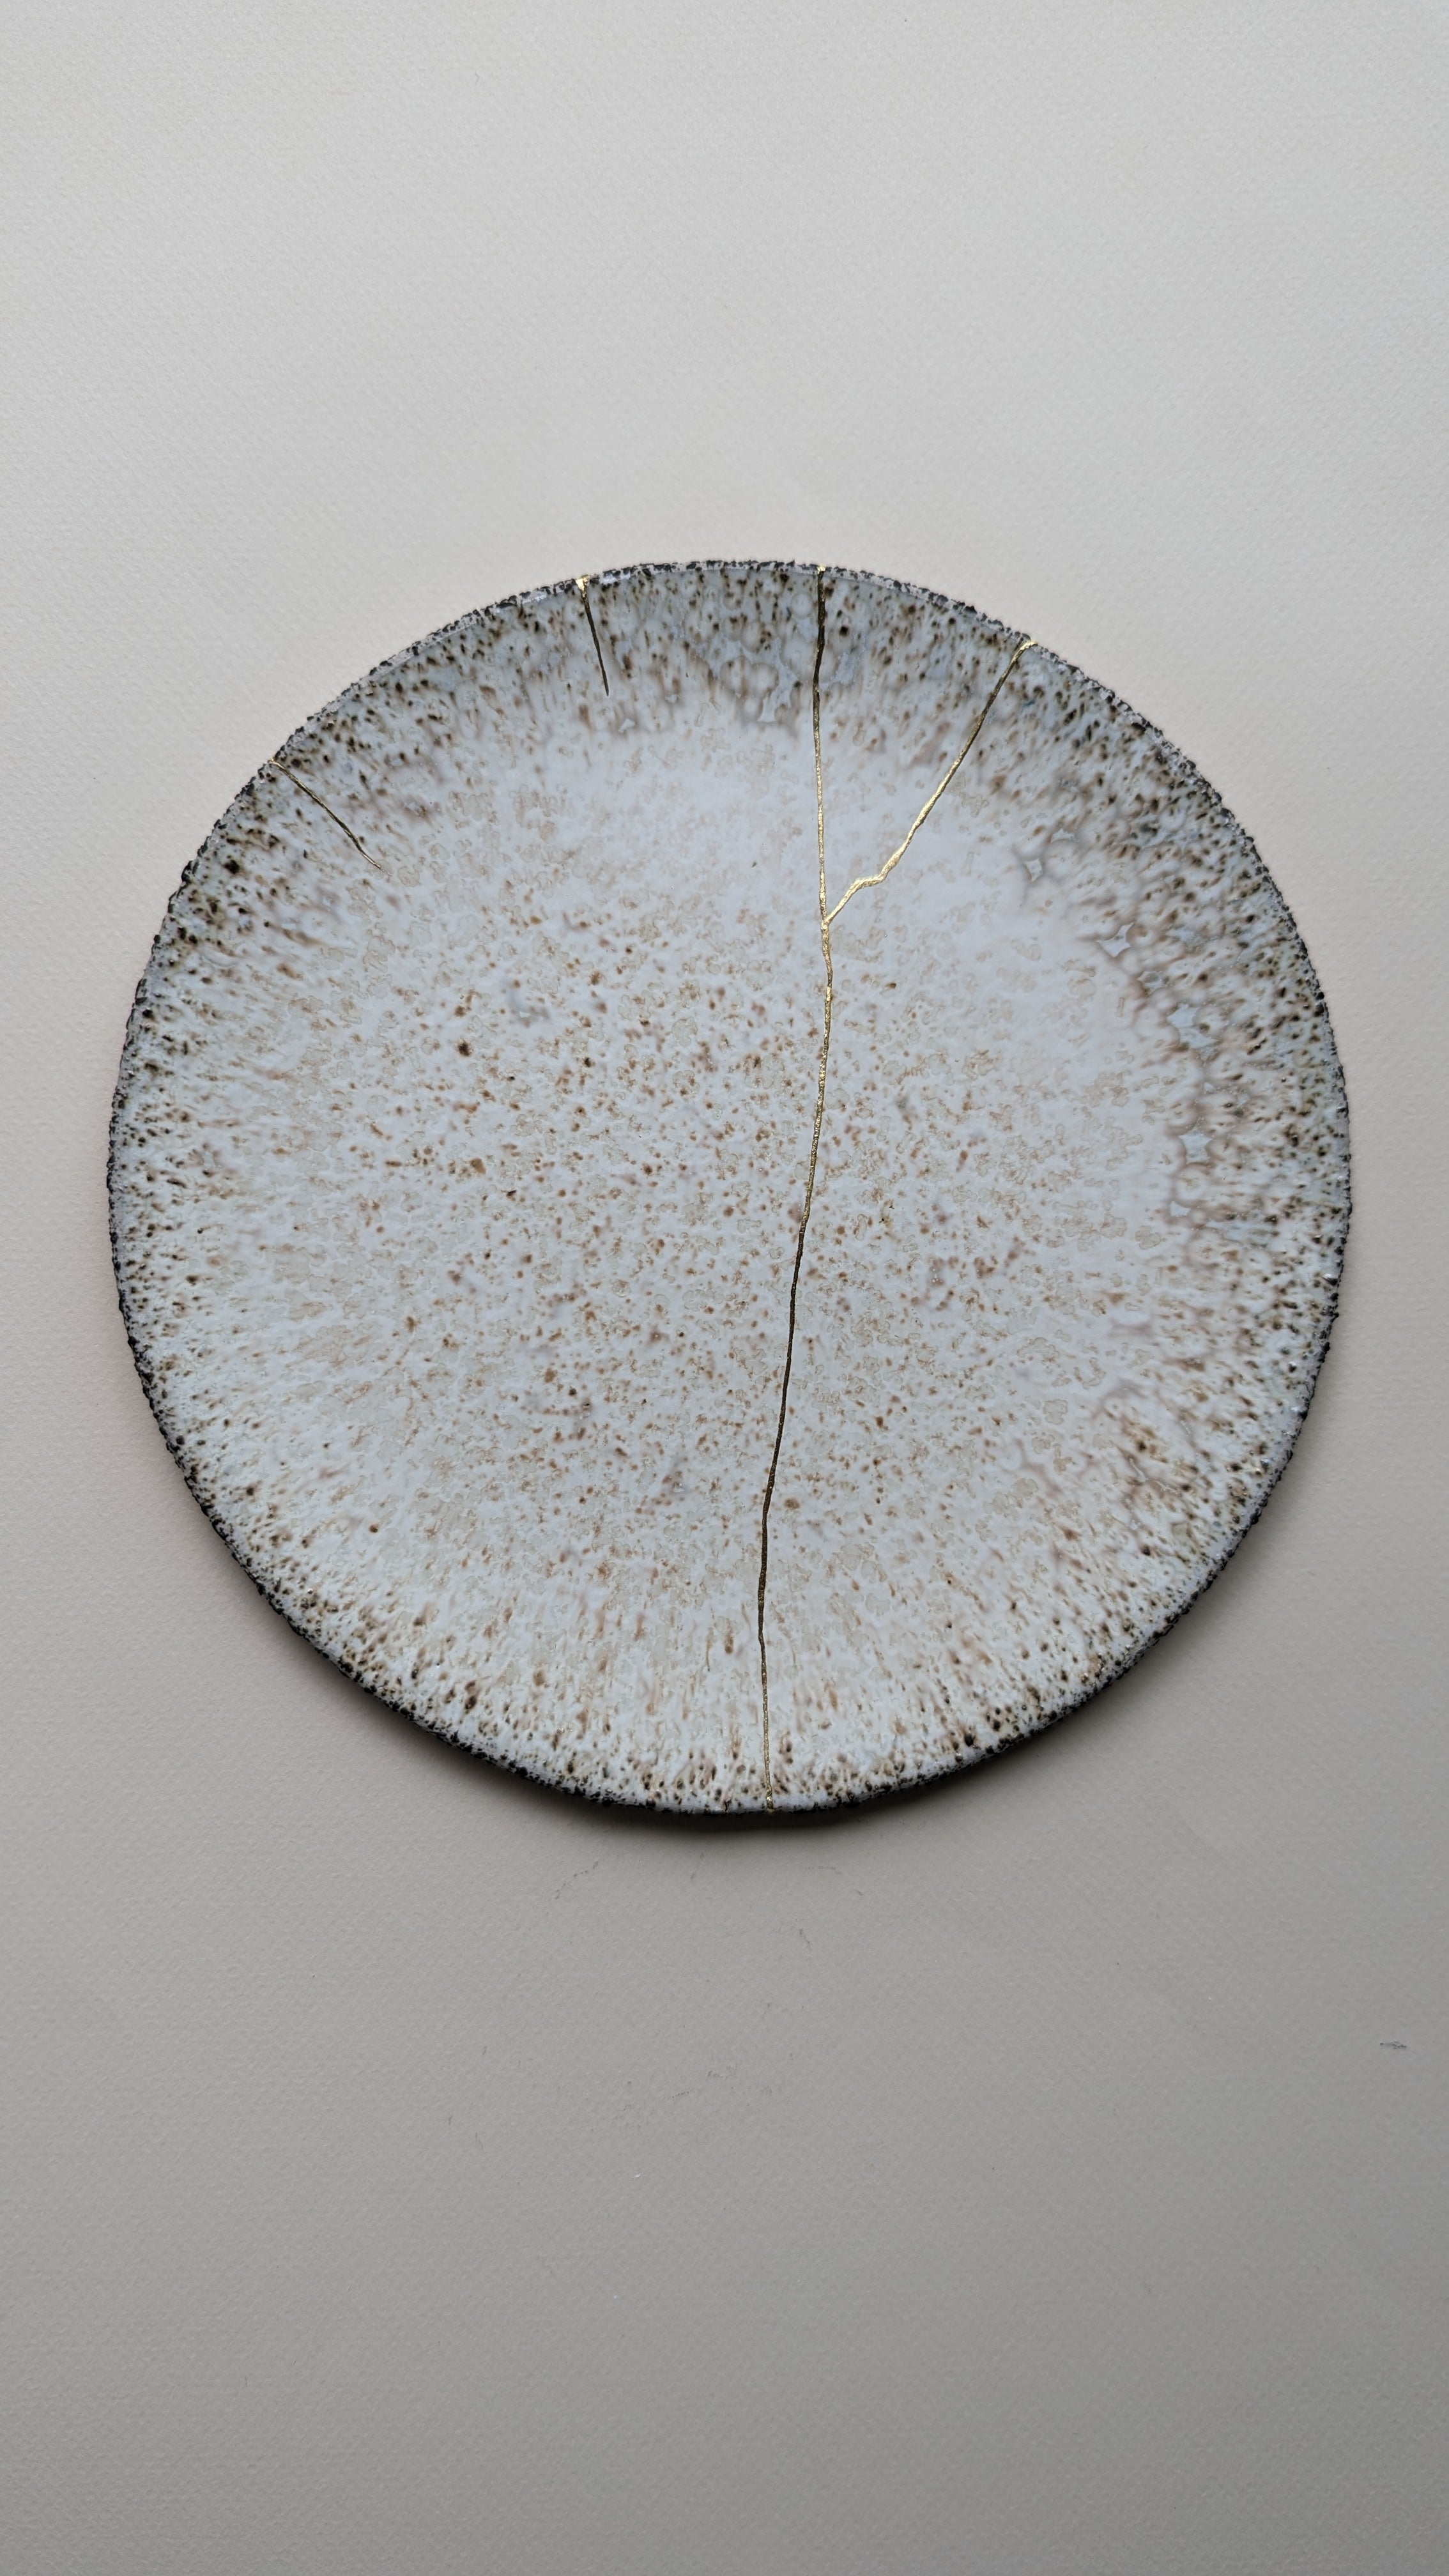 Calella de Palafrugell - Large plate 1